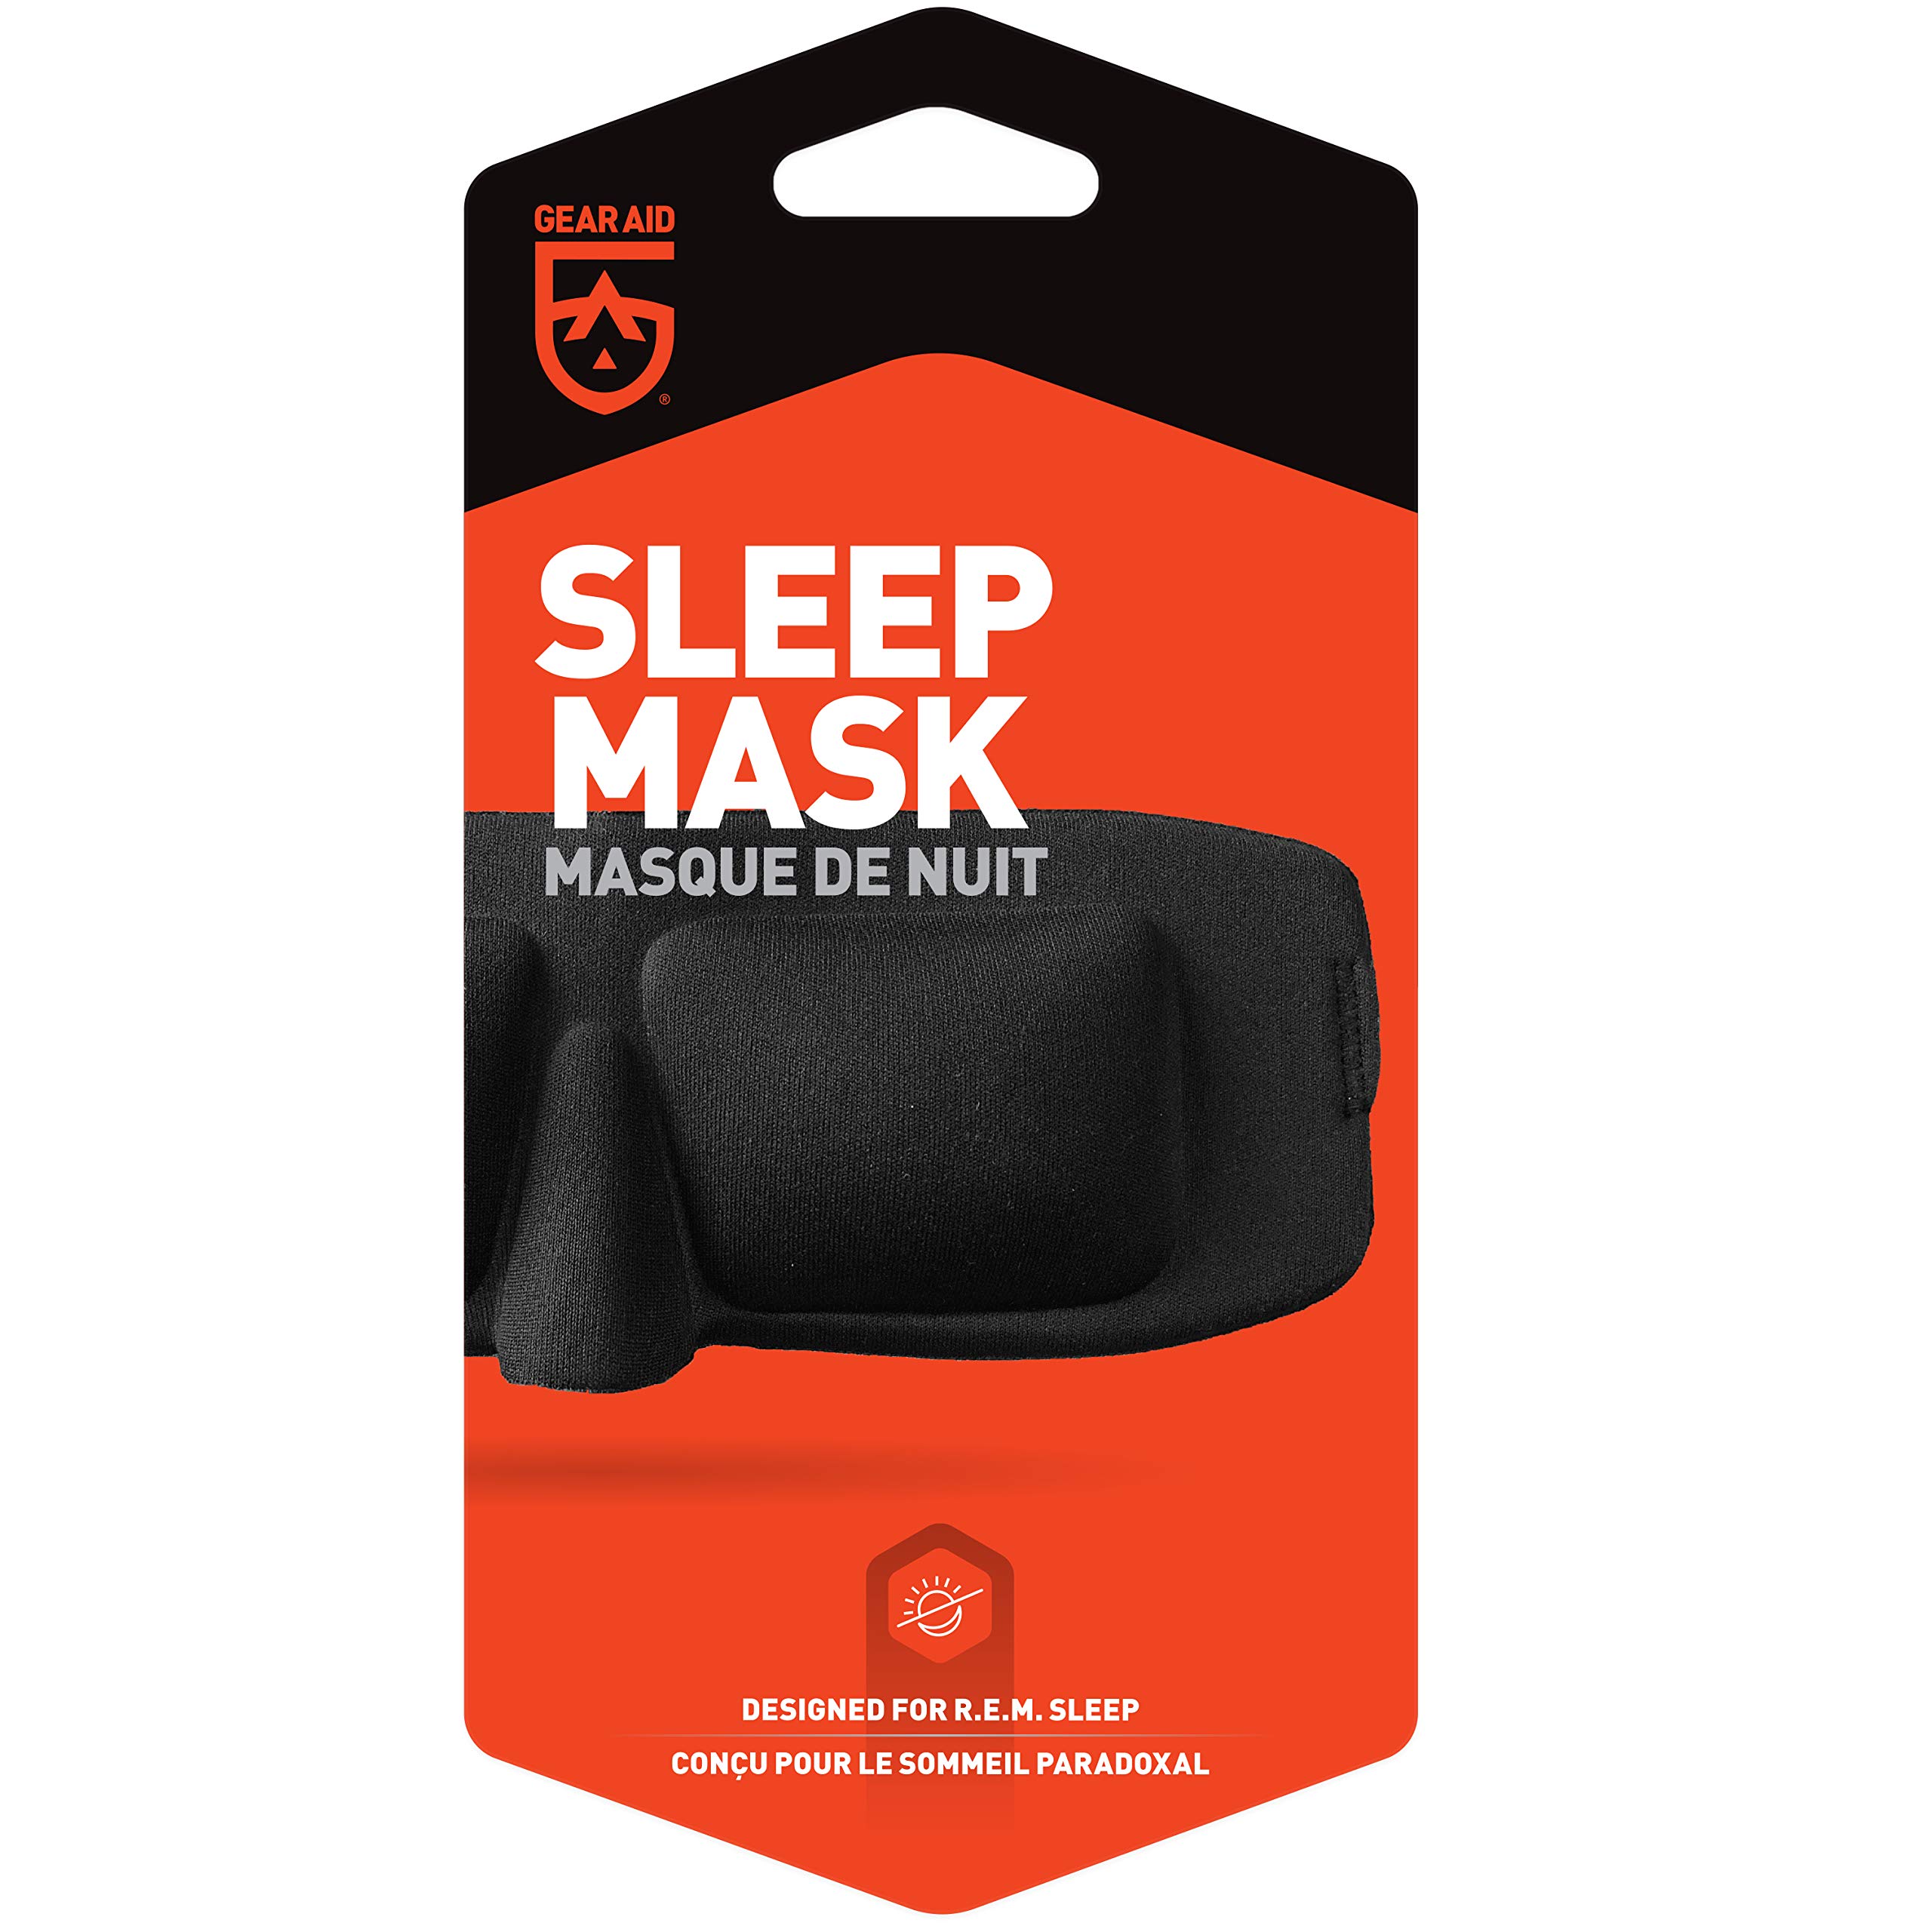 GEAR AID Sleep Mask for Deep REM Sleep for Travel and Outdoors, Black